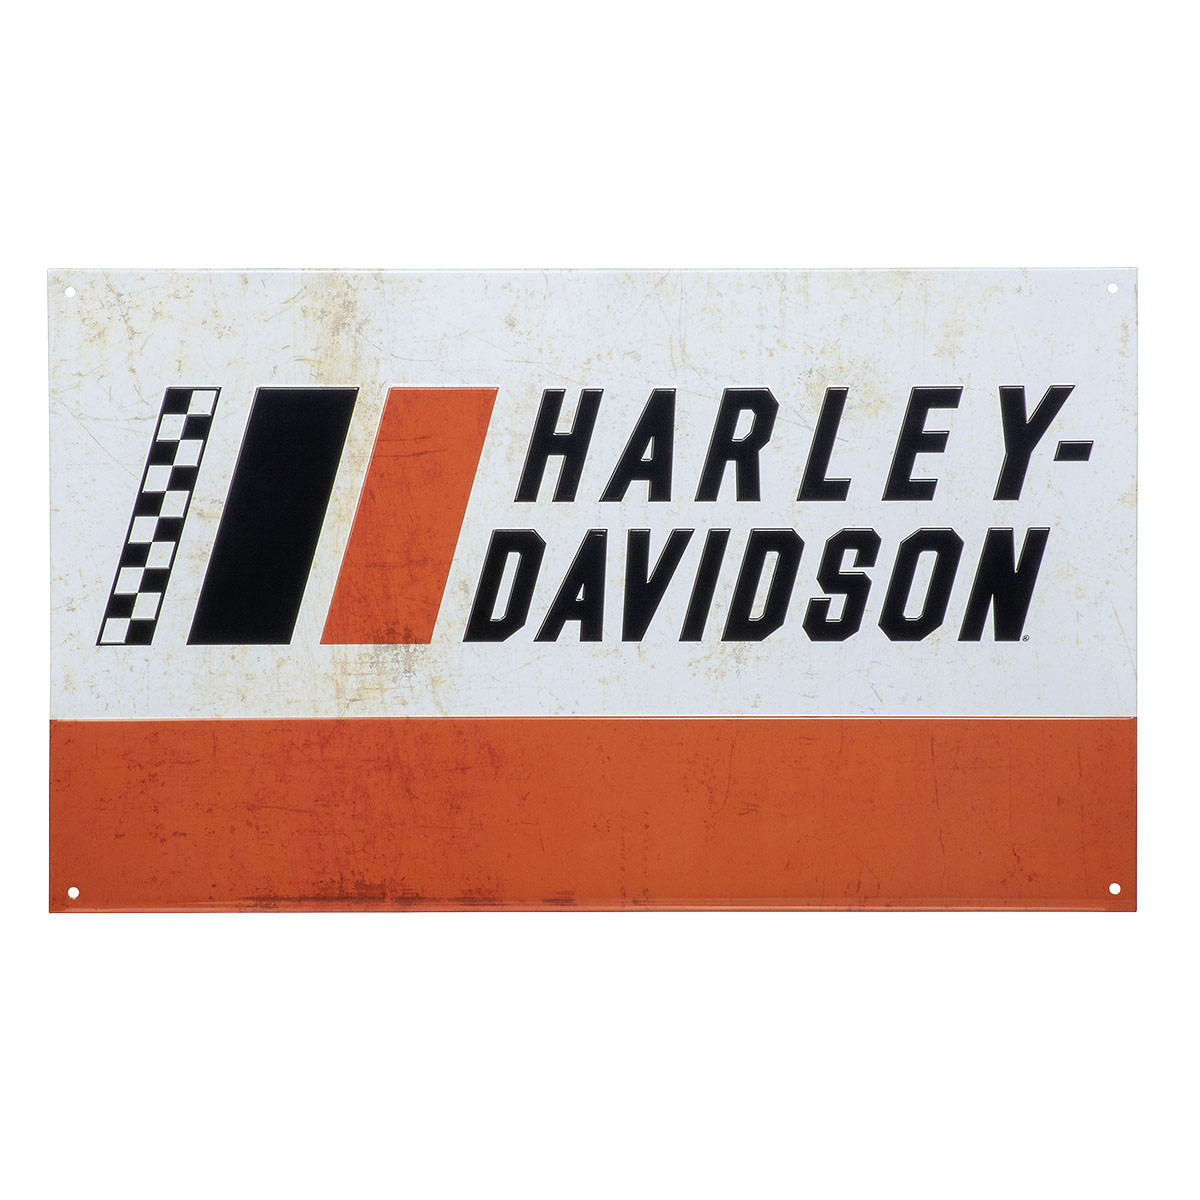 HARLEY DAVIDSON RACING STRIPES TIN SIGN